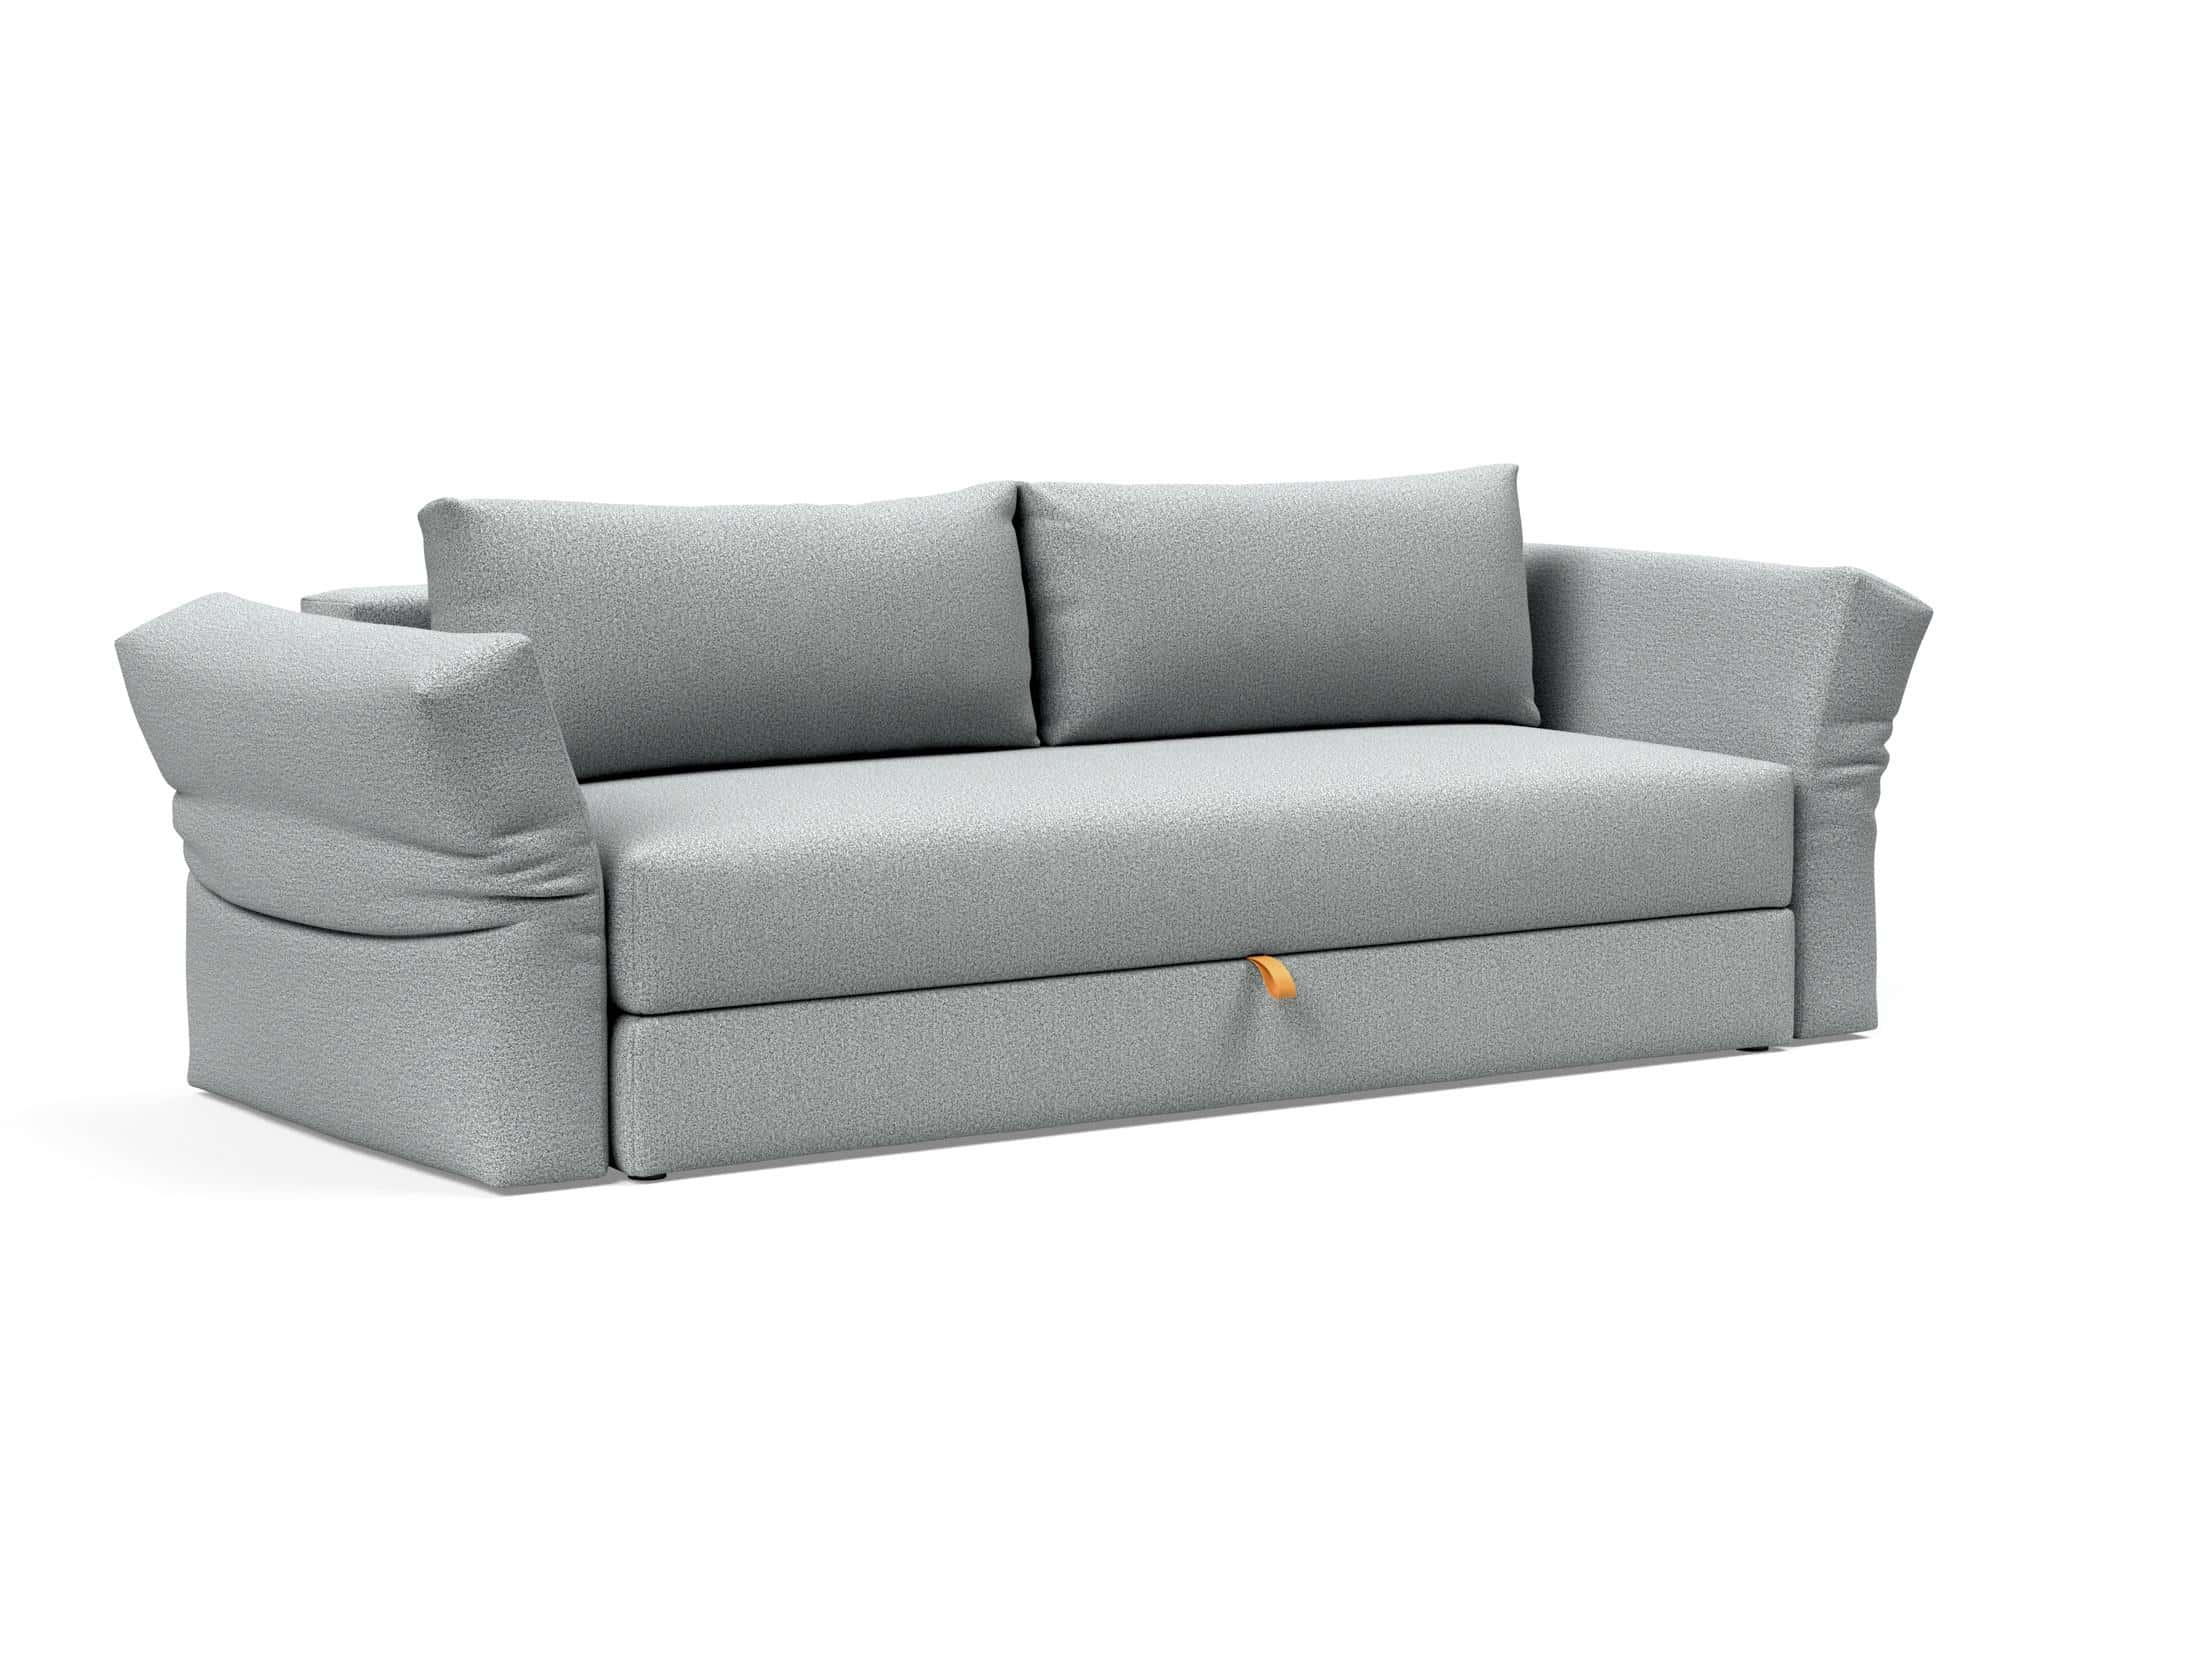 Otris Sofa Bed w/Arms (Full Size) Melange Light Gray by Innovation